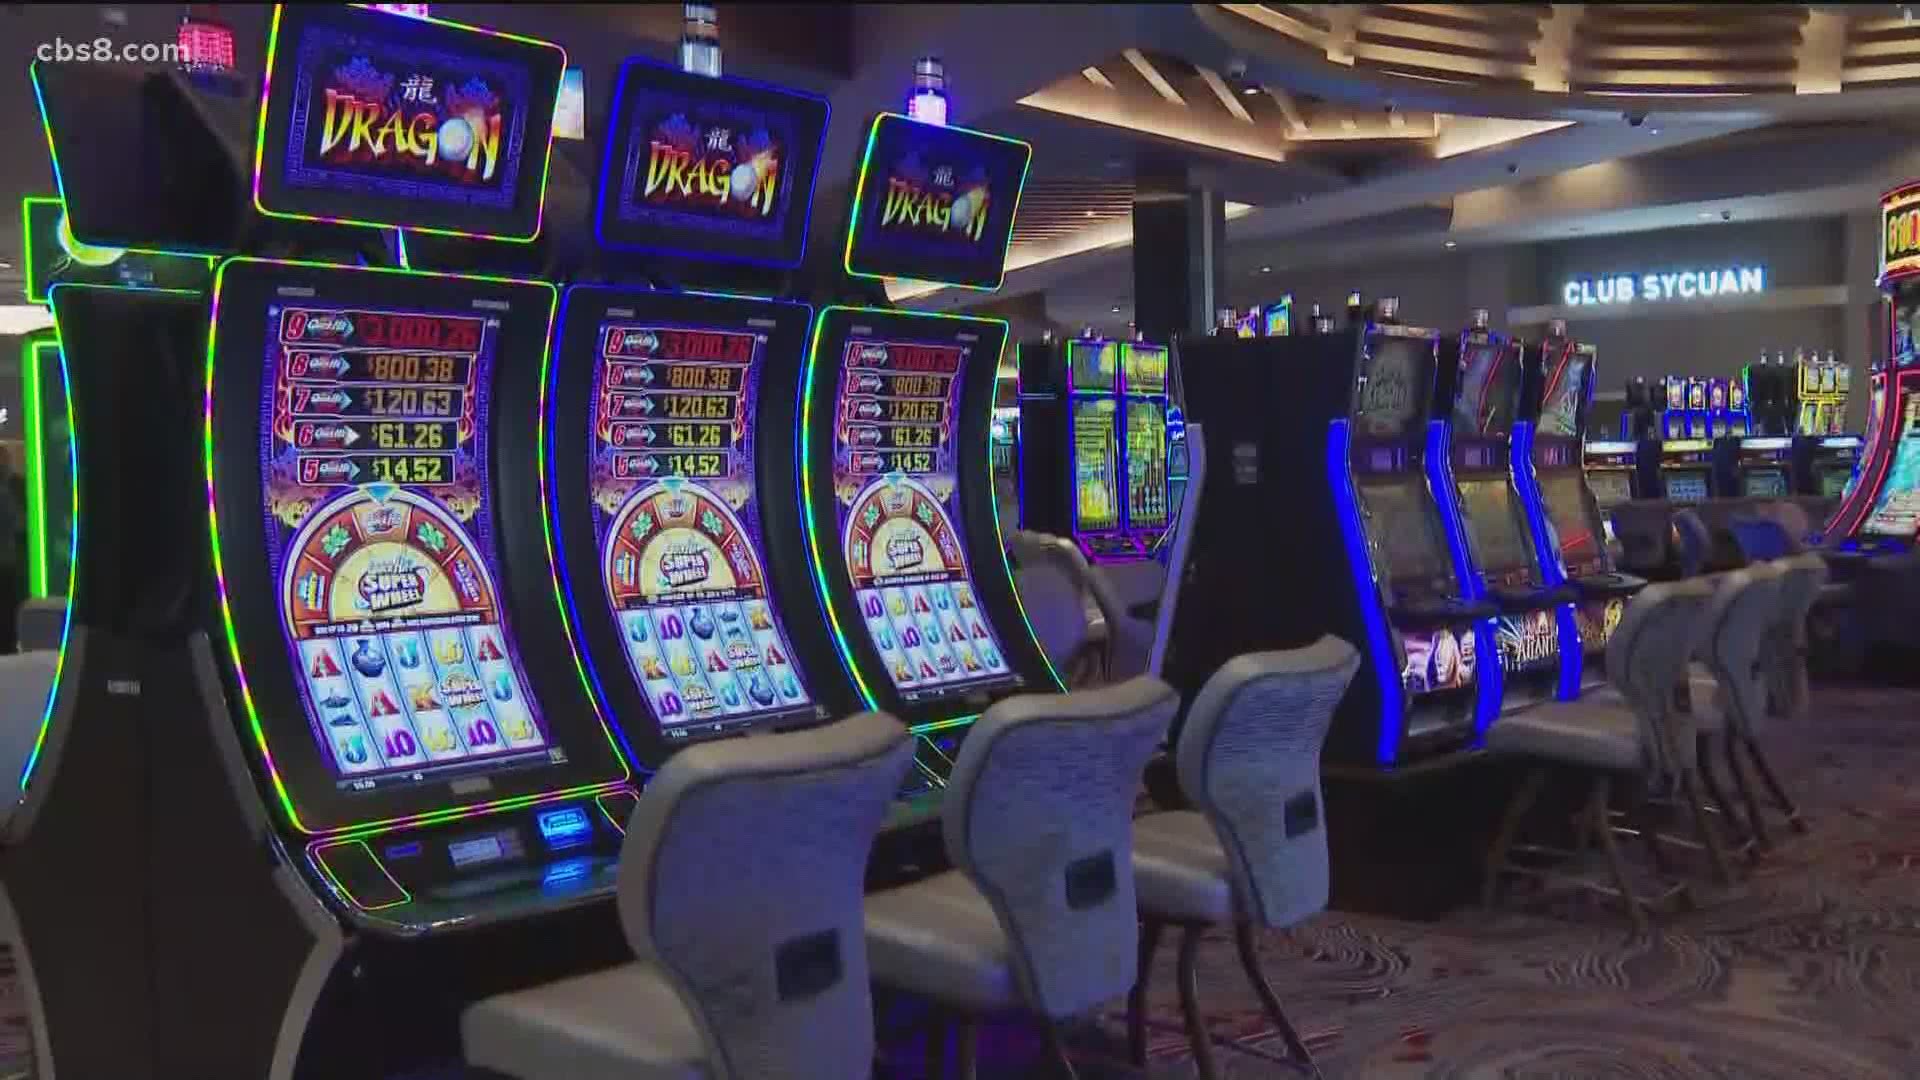 Louisville Ky Closest Casino